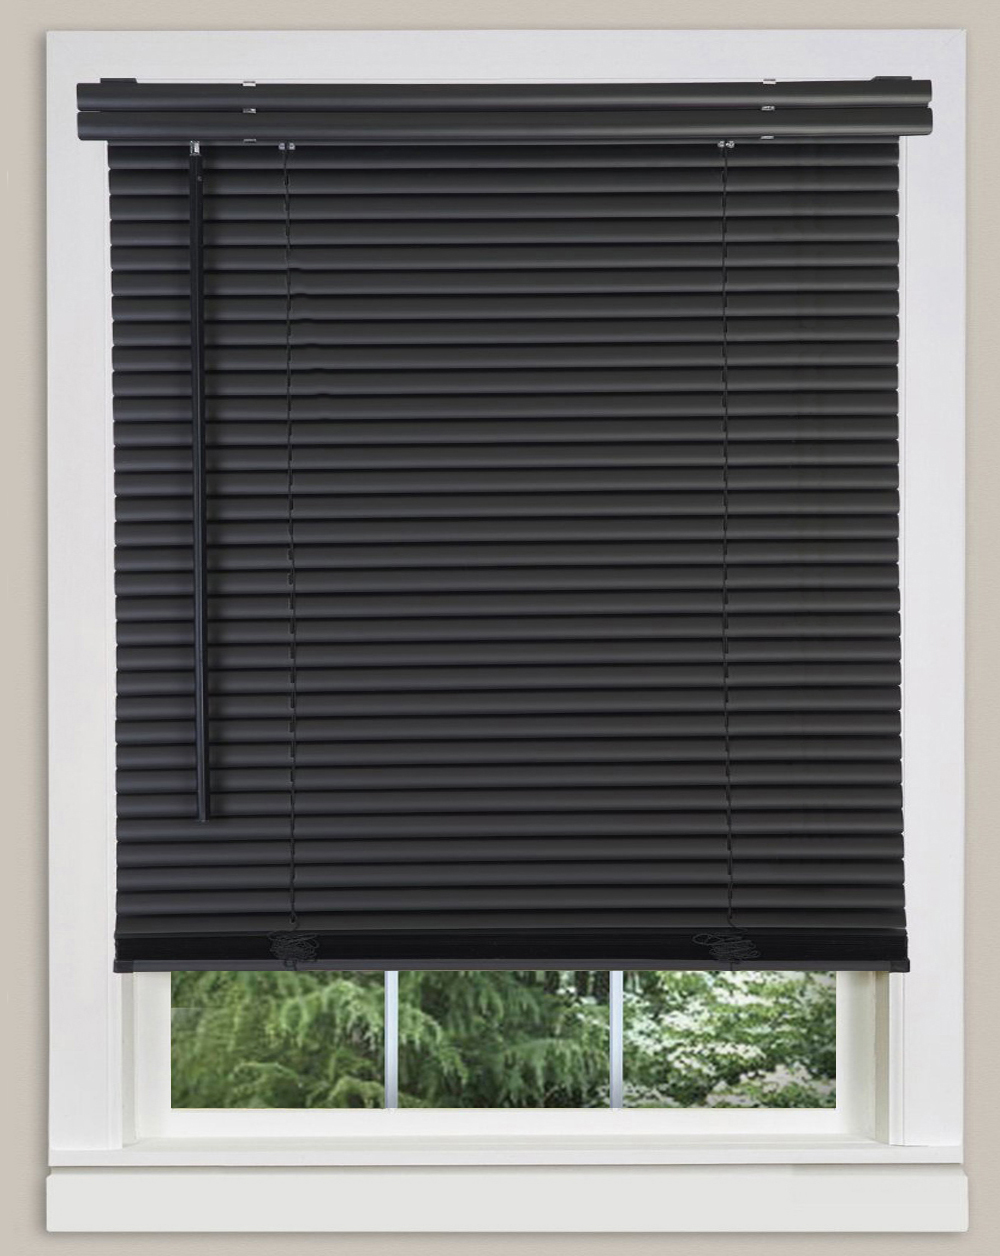 PowerSellerUSA Cordless Window Blinds Anti-UV Window Treatment 35 Width x 64 Length, Mahogany 2 Slats Vinyl Mini Blind Premium Quality Embossed Woodgrain Fits Windows 18-72 